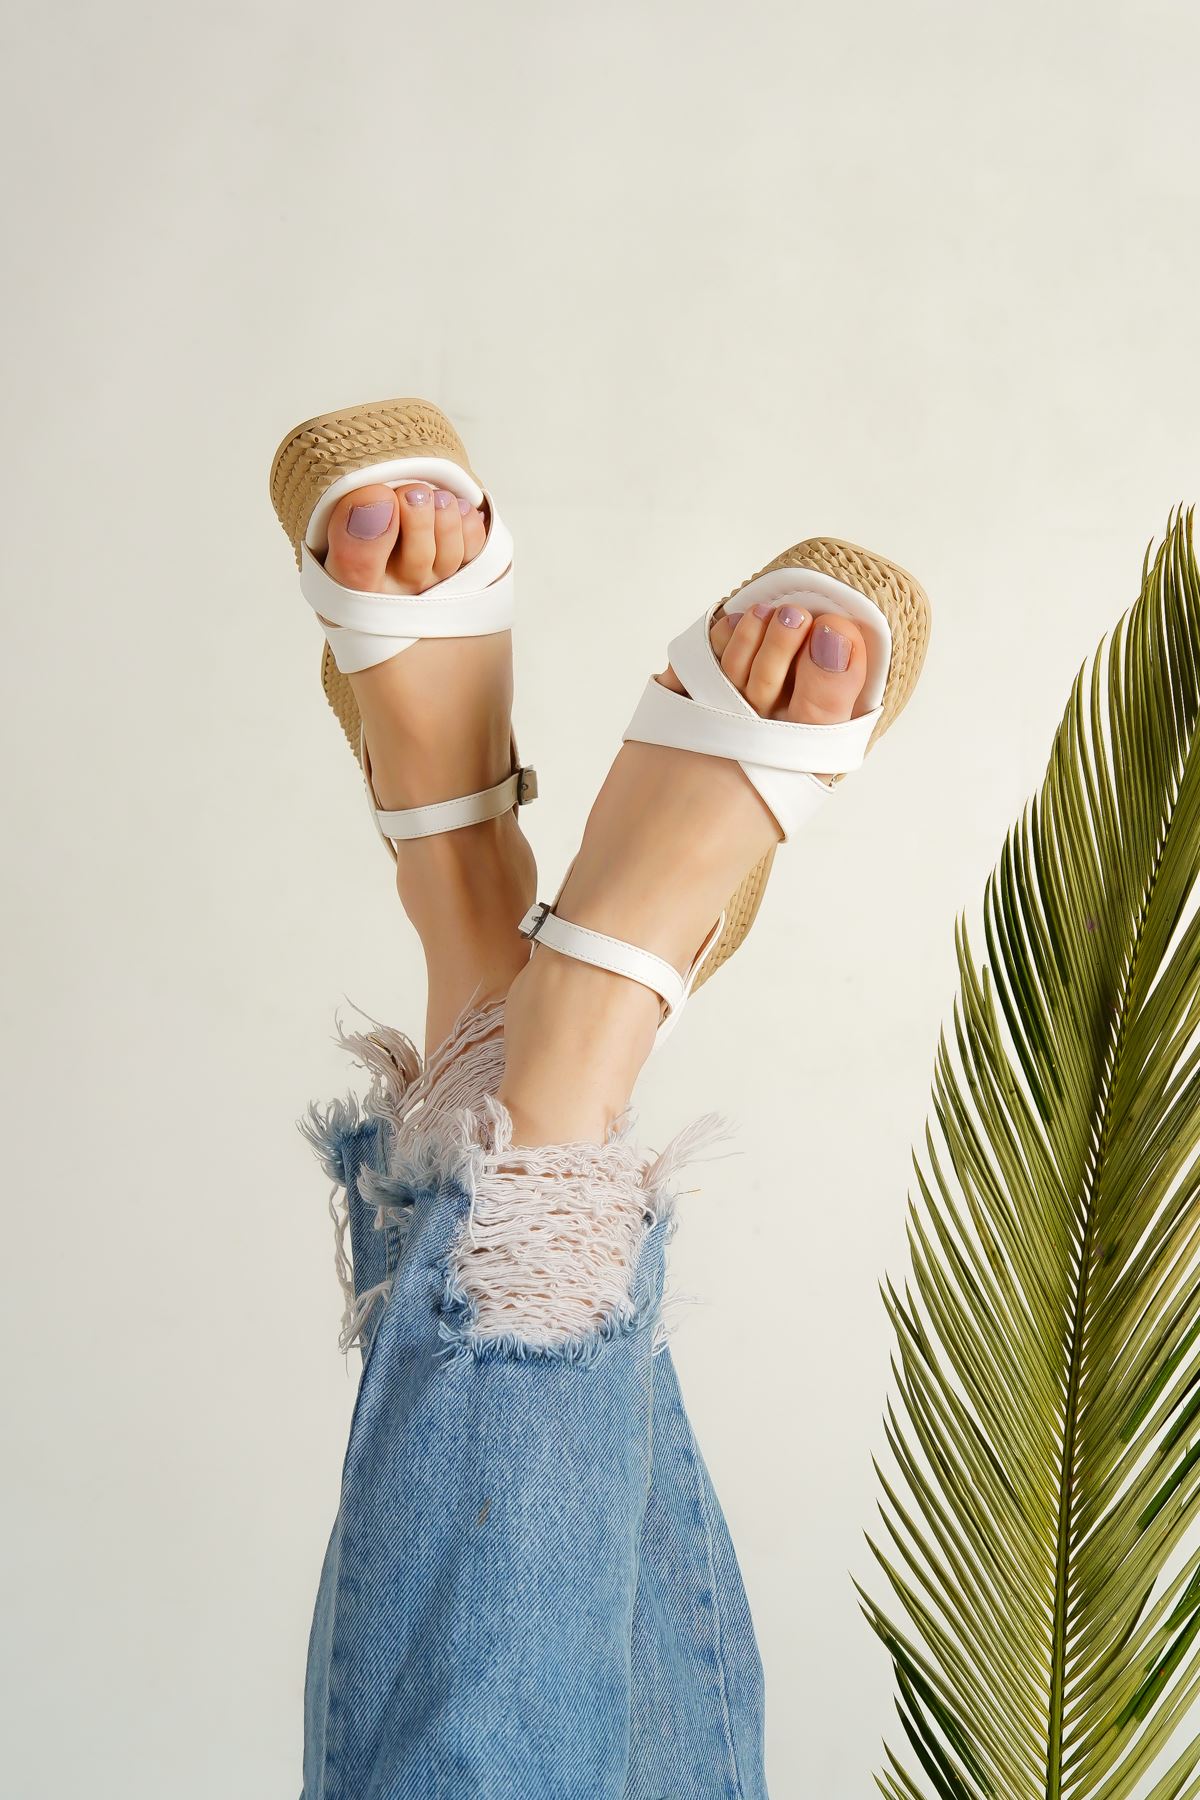 Olezka Beyaz Çapraz Bant Dolgu Topuklu Ayakkabı